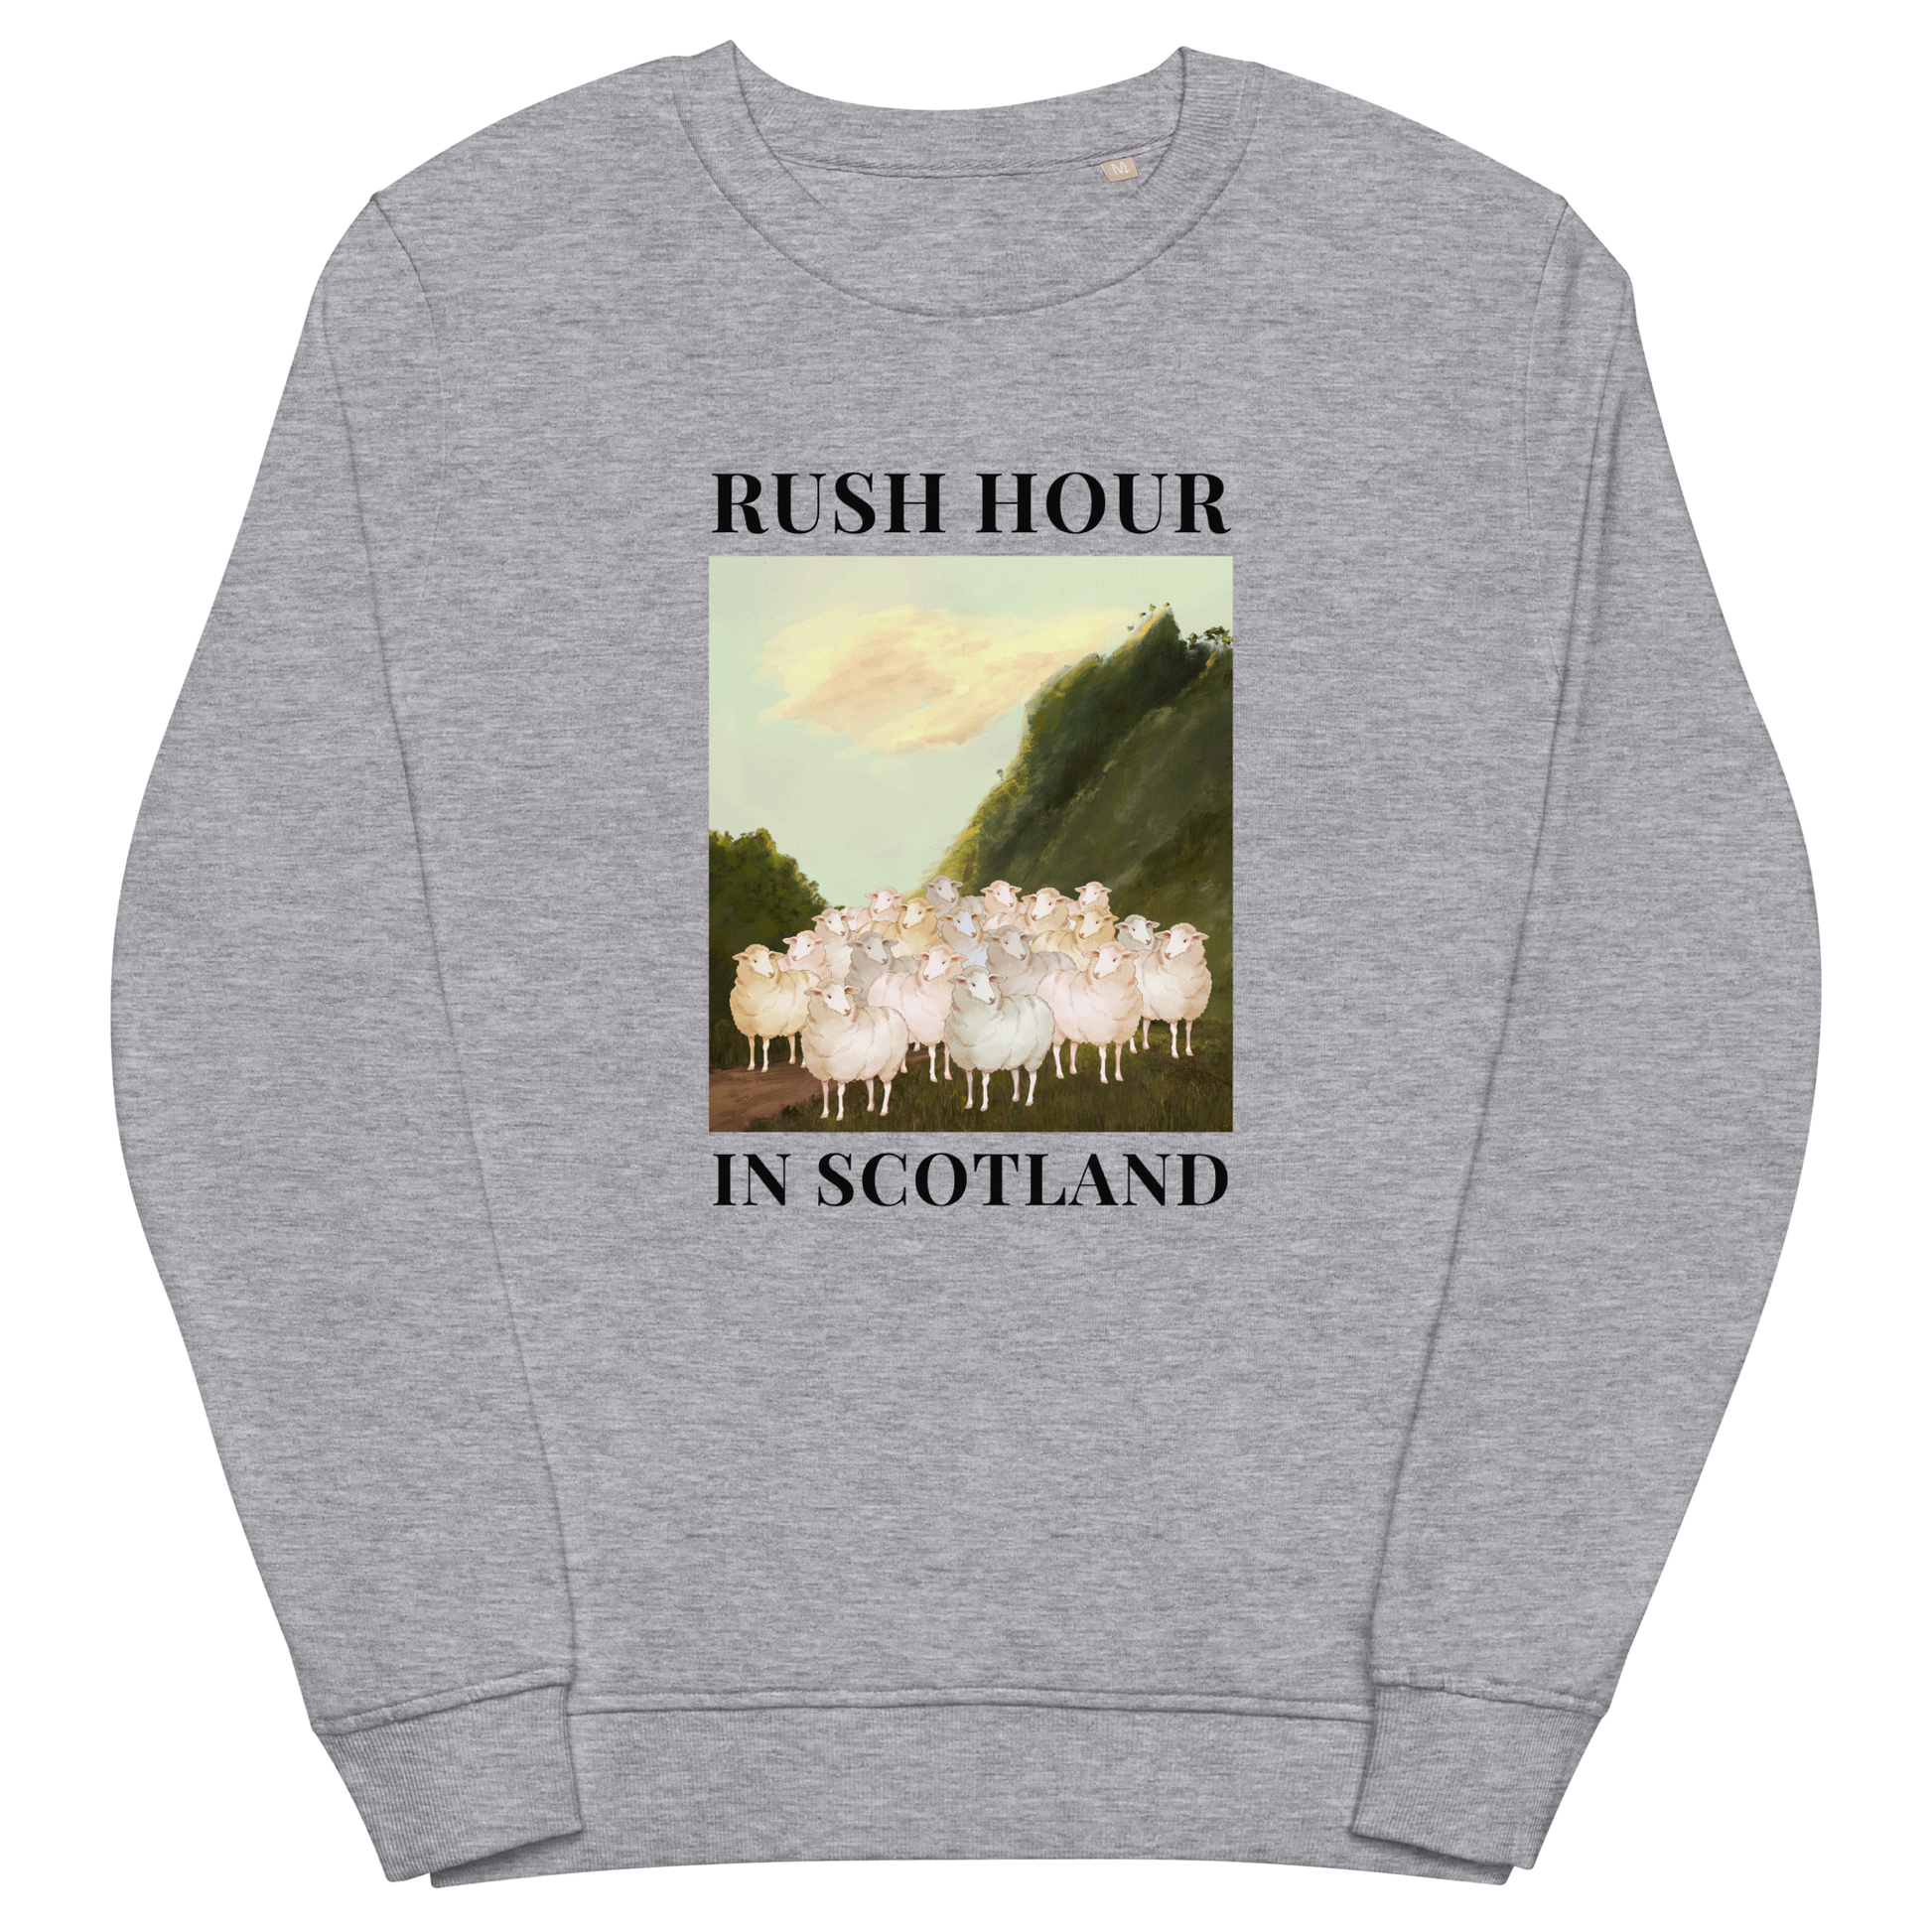 Grey Melange Sheep Organic Sweatshirt featuring a comical Rush Hour In Scotland graphic on the chest - Artsy & Funny Graphic Sheep Sweatshirts - Boozy Fox